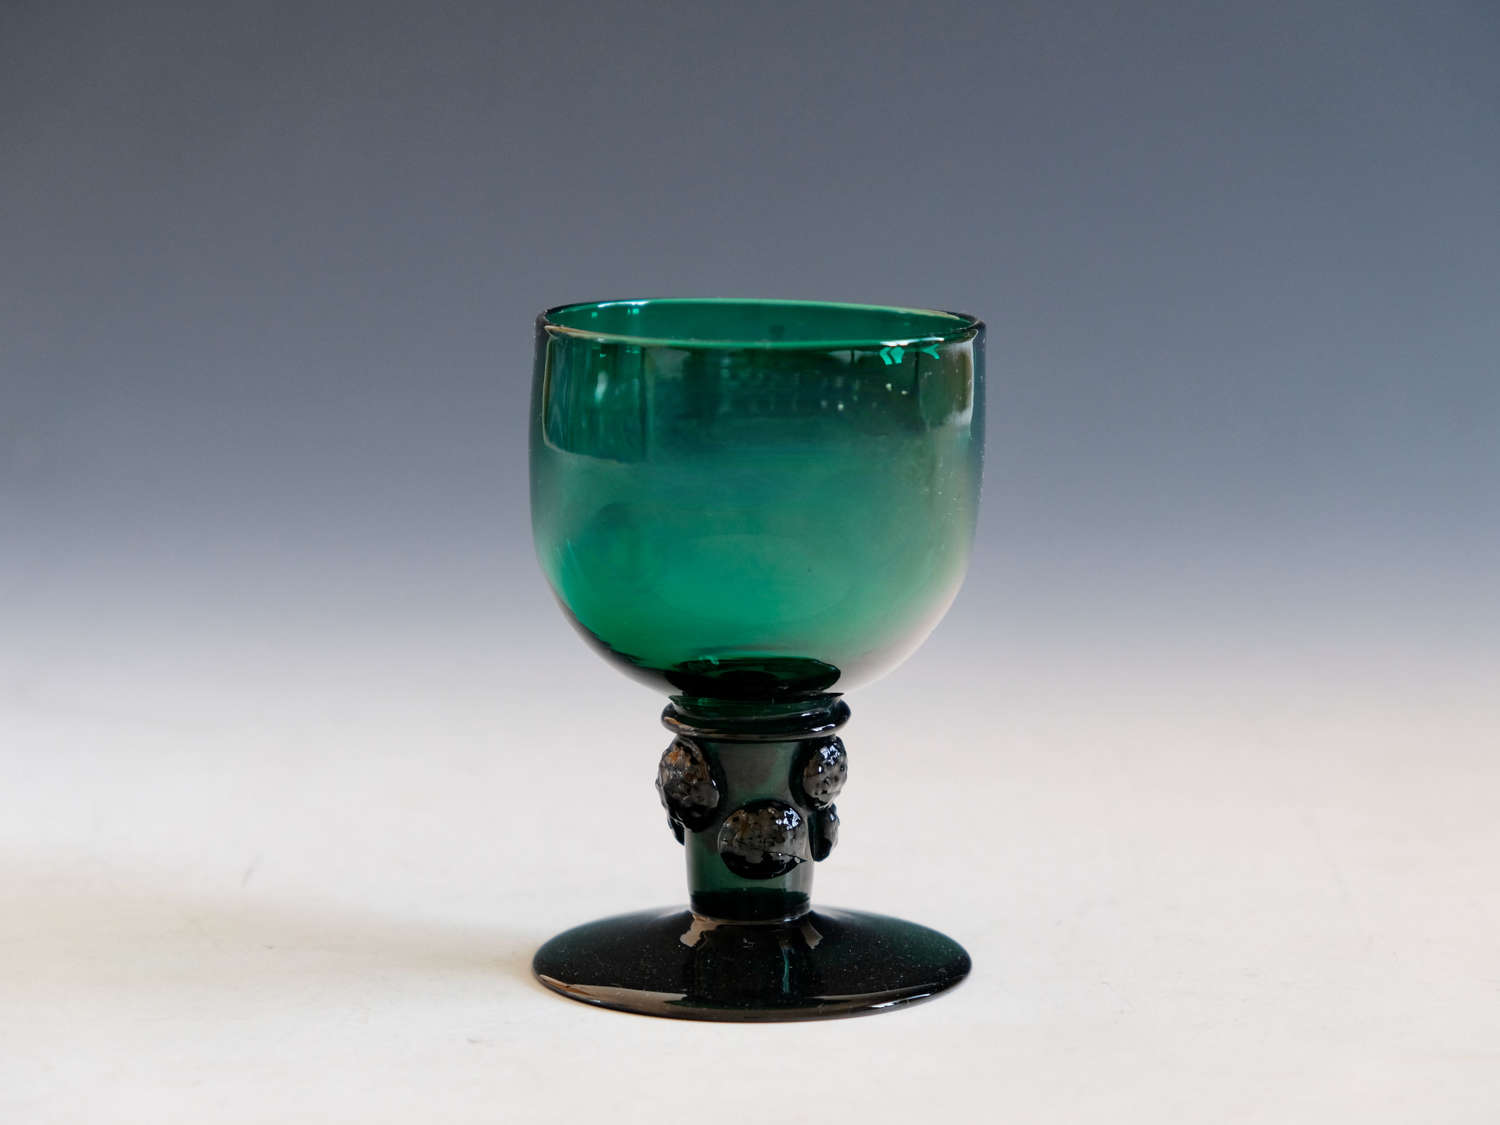 Antique glass green wine glass English c1830